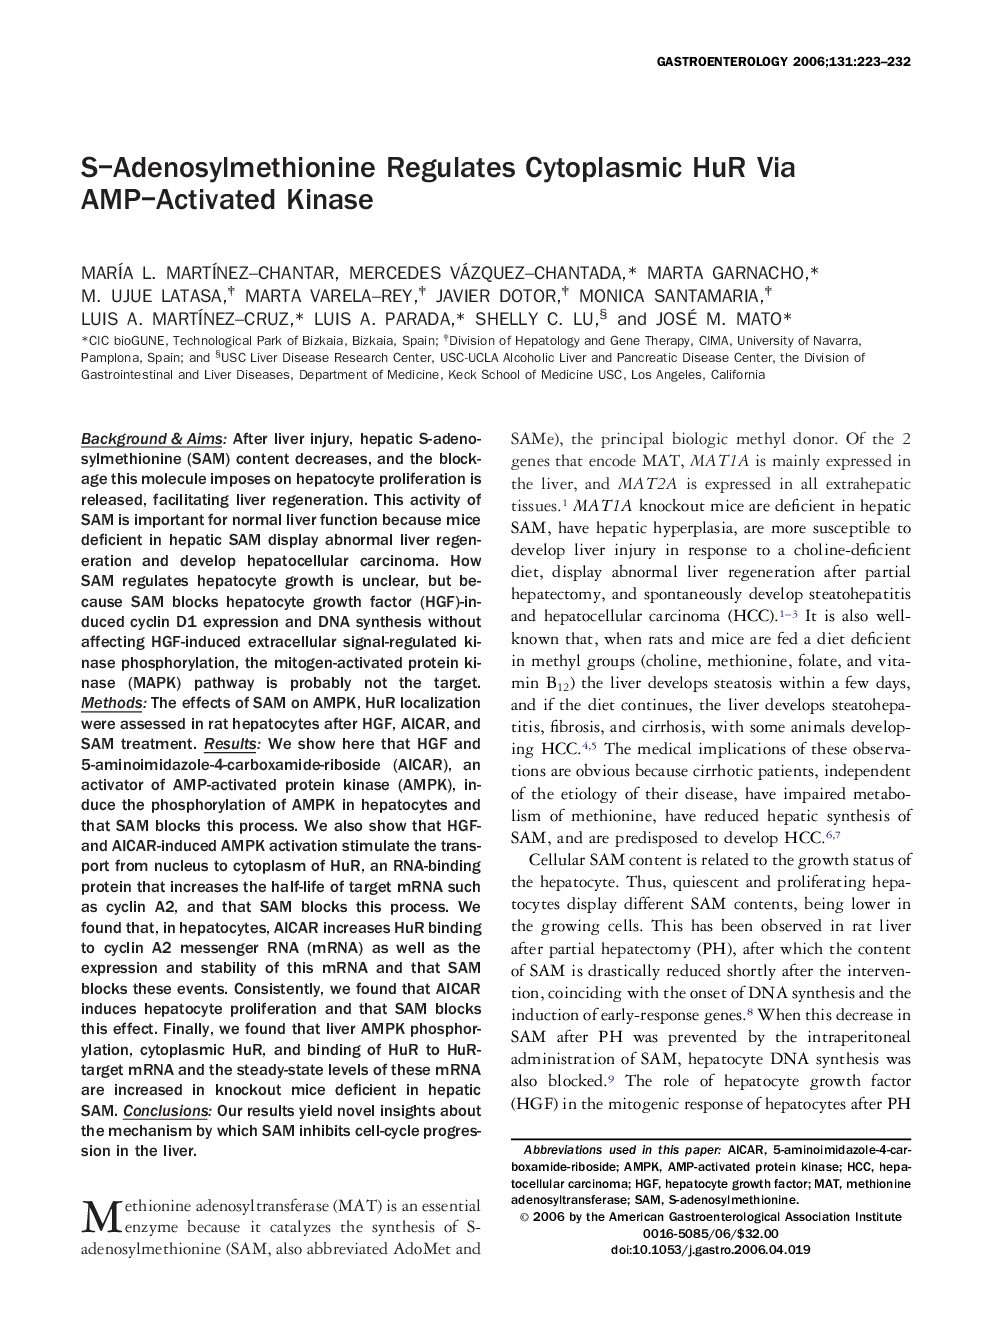 S-Adenosylmethionine Regulates Cytoplasmic HuR Via AMP-Activated Kinase